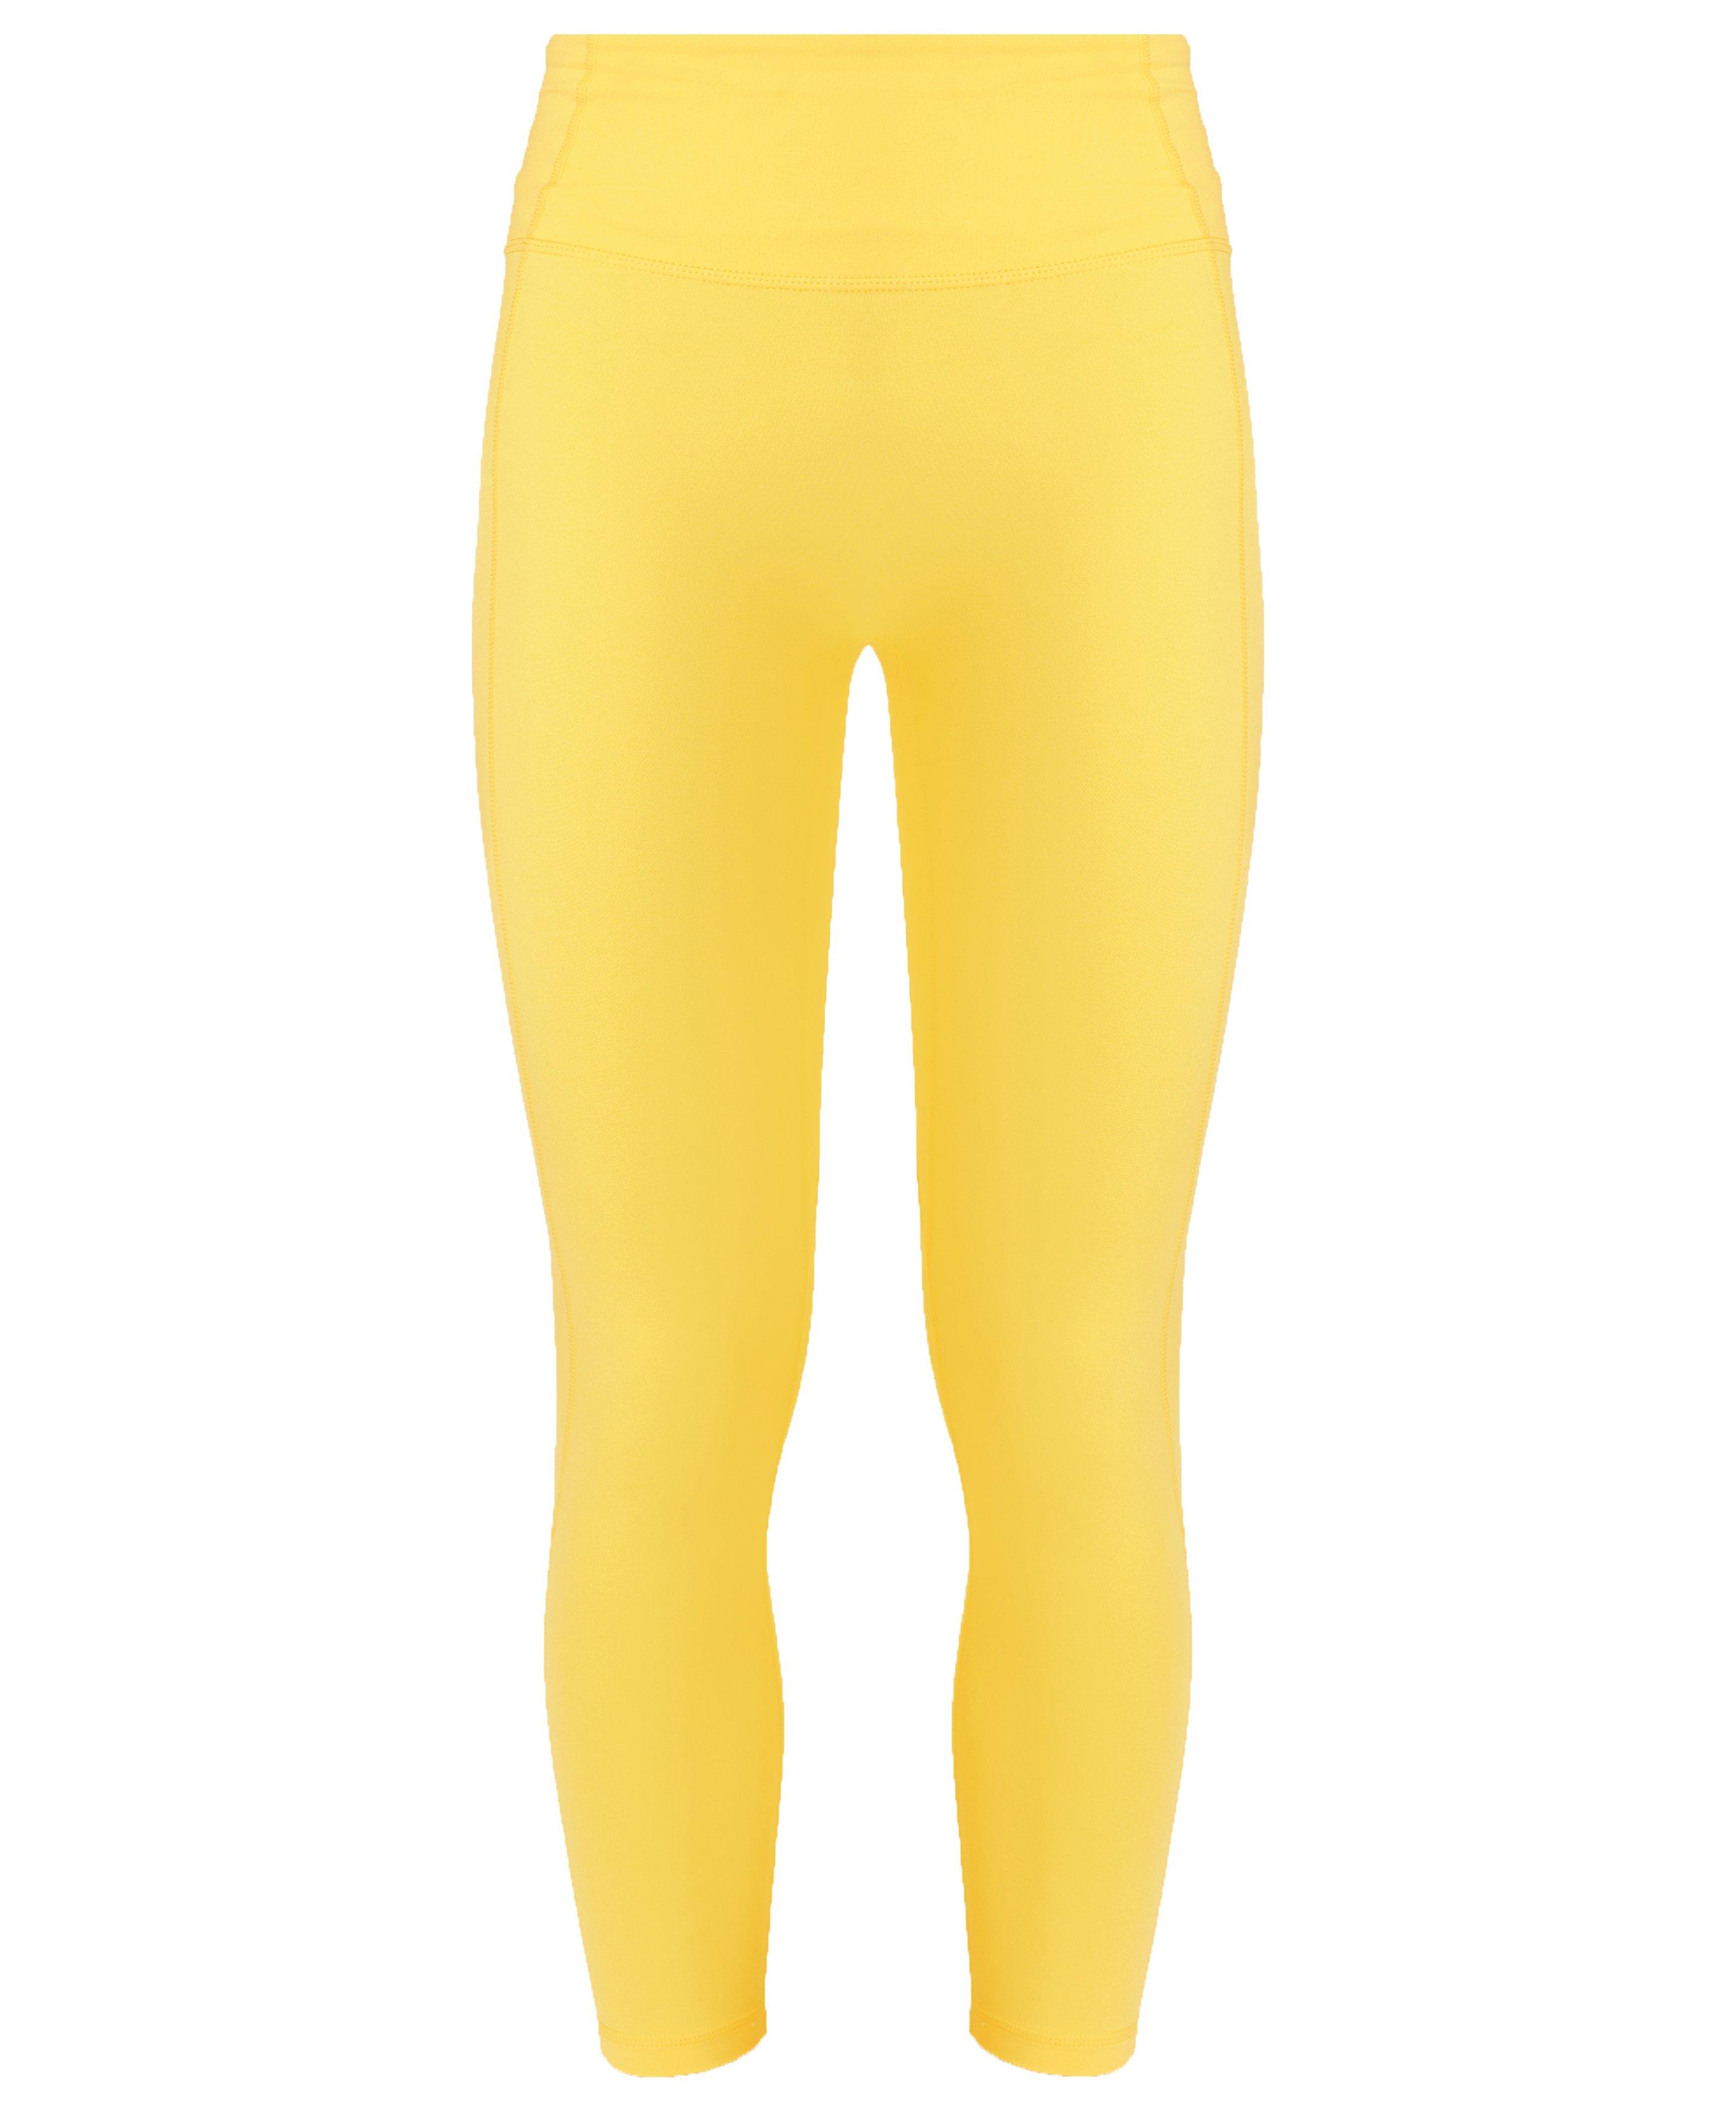 Mono b Soft Sunshine Yellow Leggings - LA Trends Addict